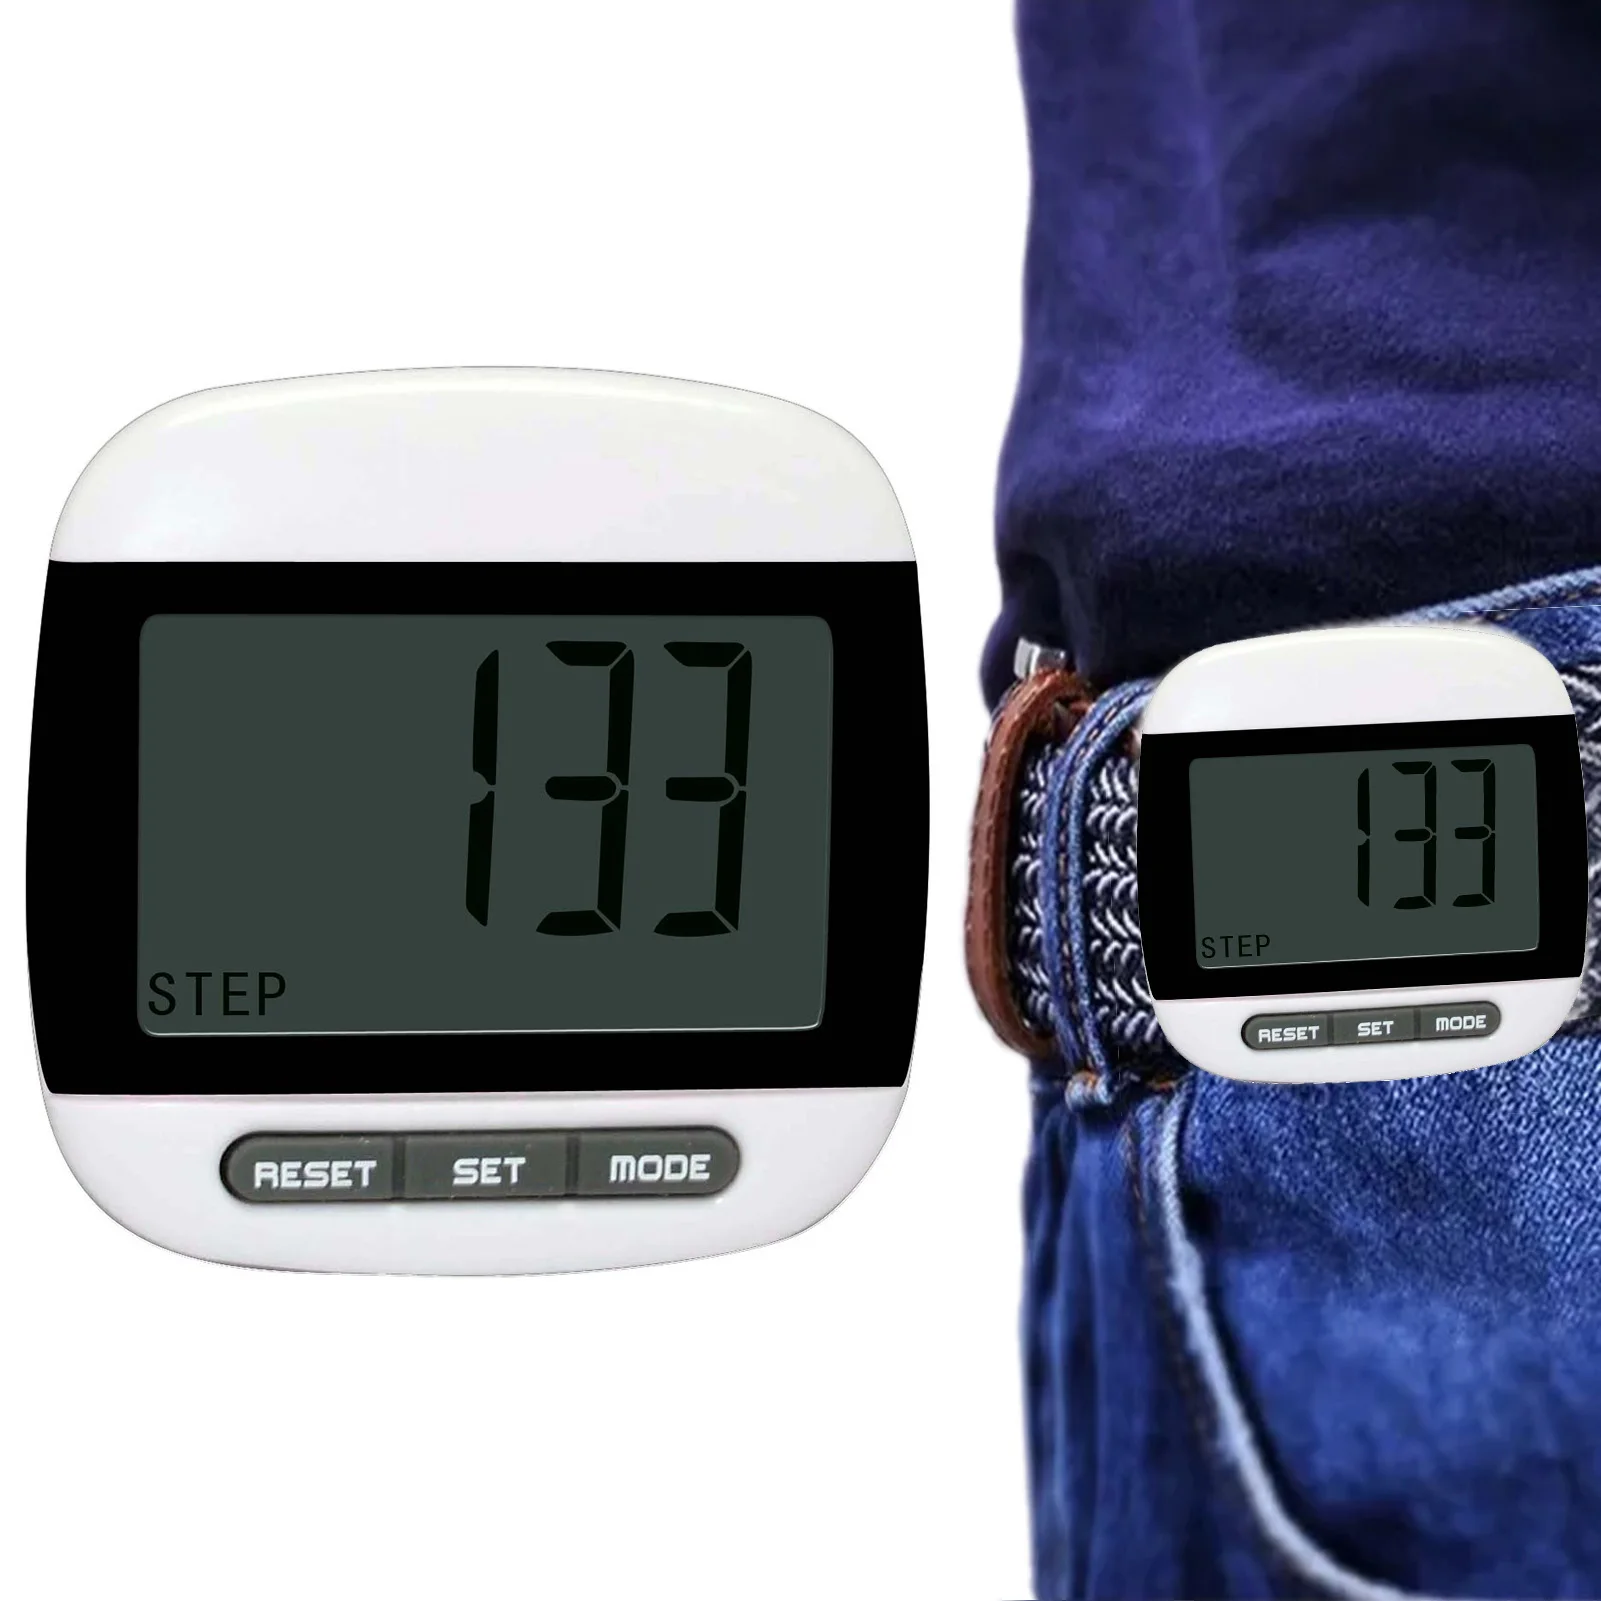 

Pedometer For Walking Pedometer For Walking Seniors Clip On Pedometer For Walking Steps And Miles Calories Large Display Step